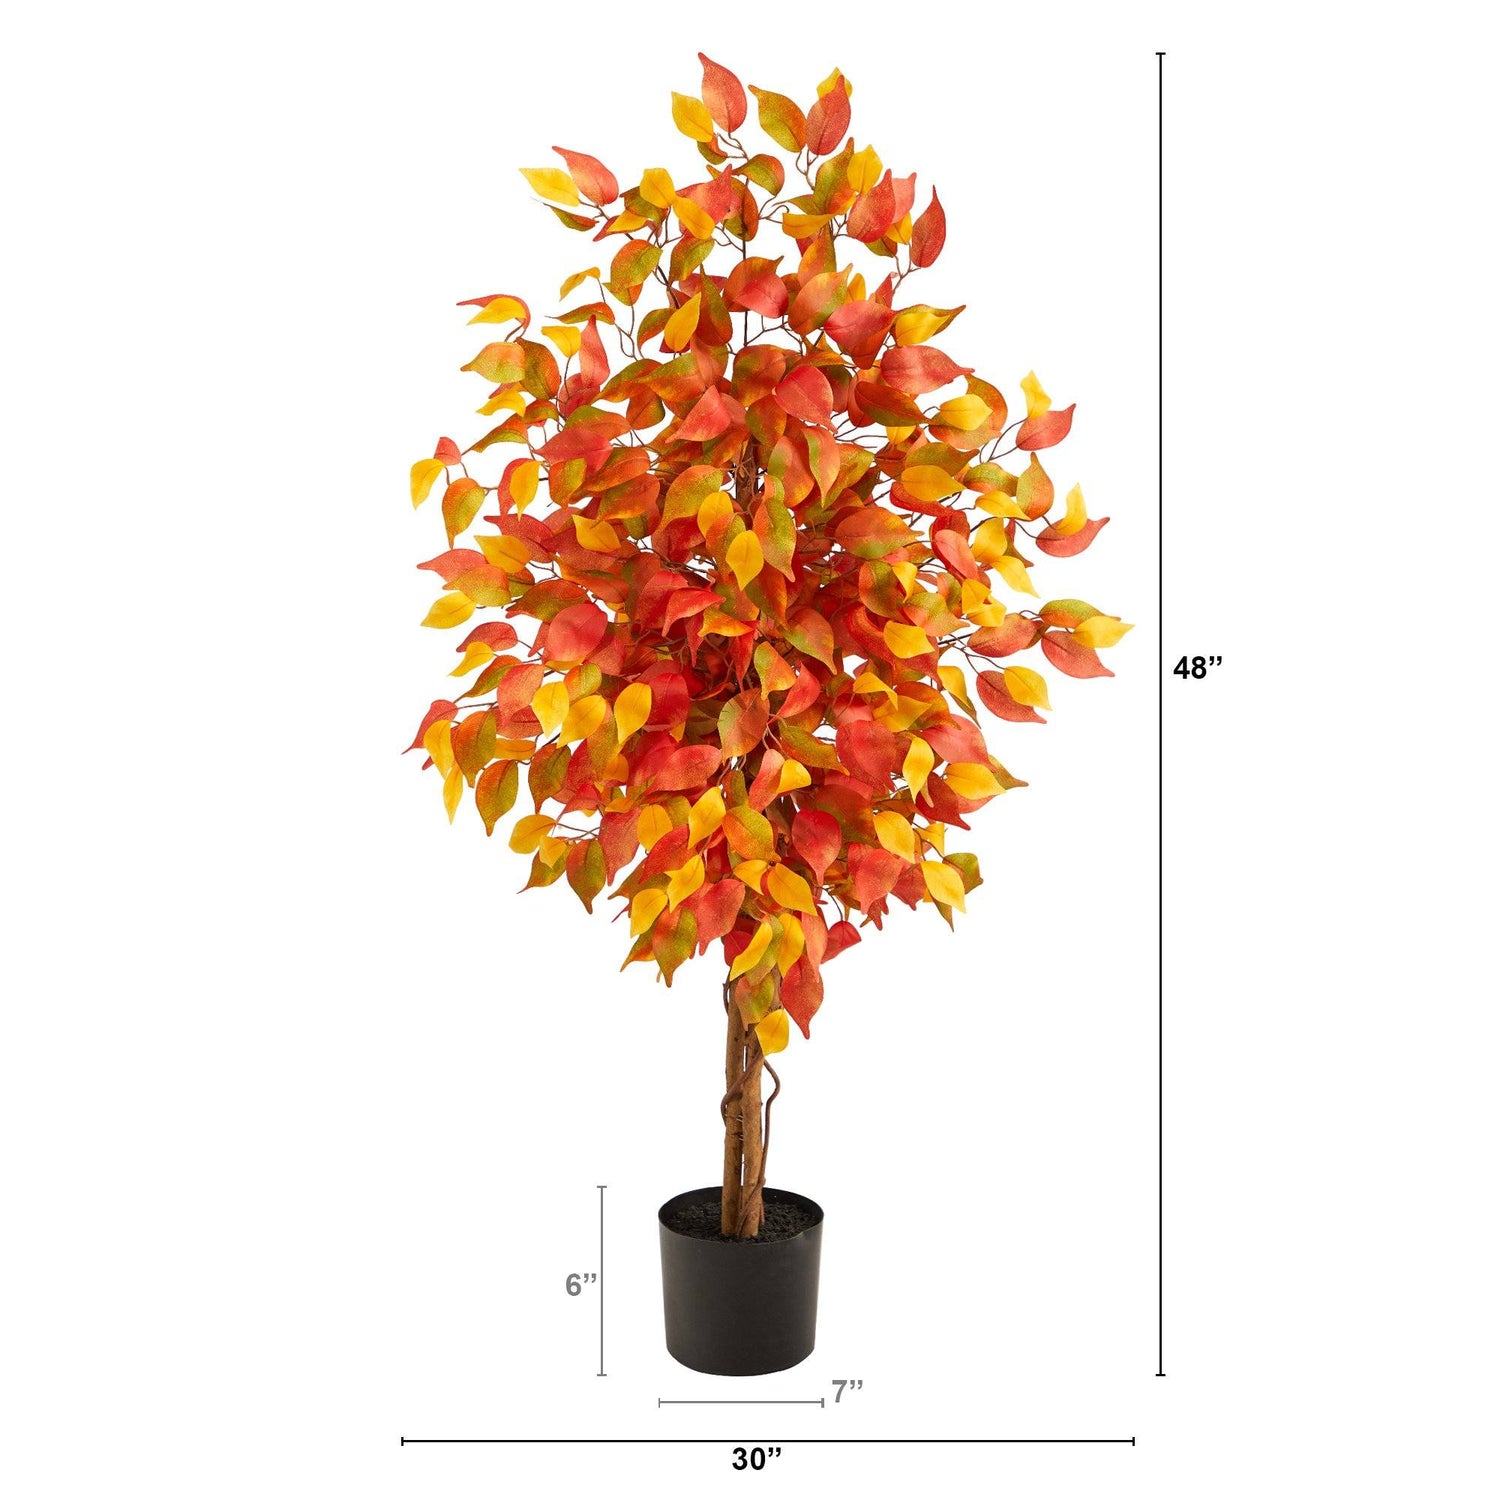 4’ Autumn Ficus Artificial Fall Tree